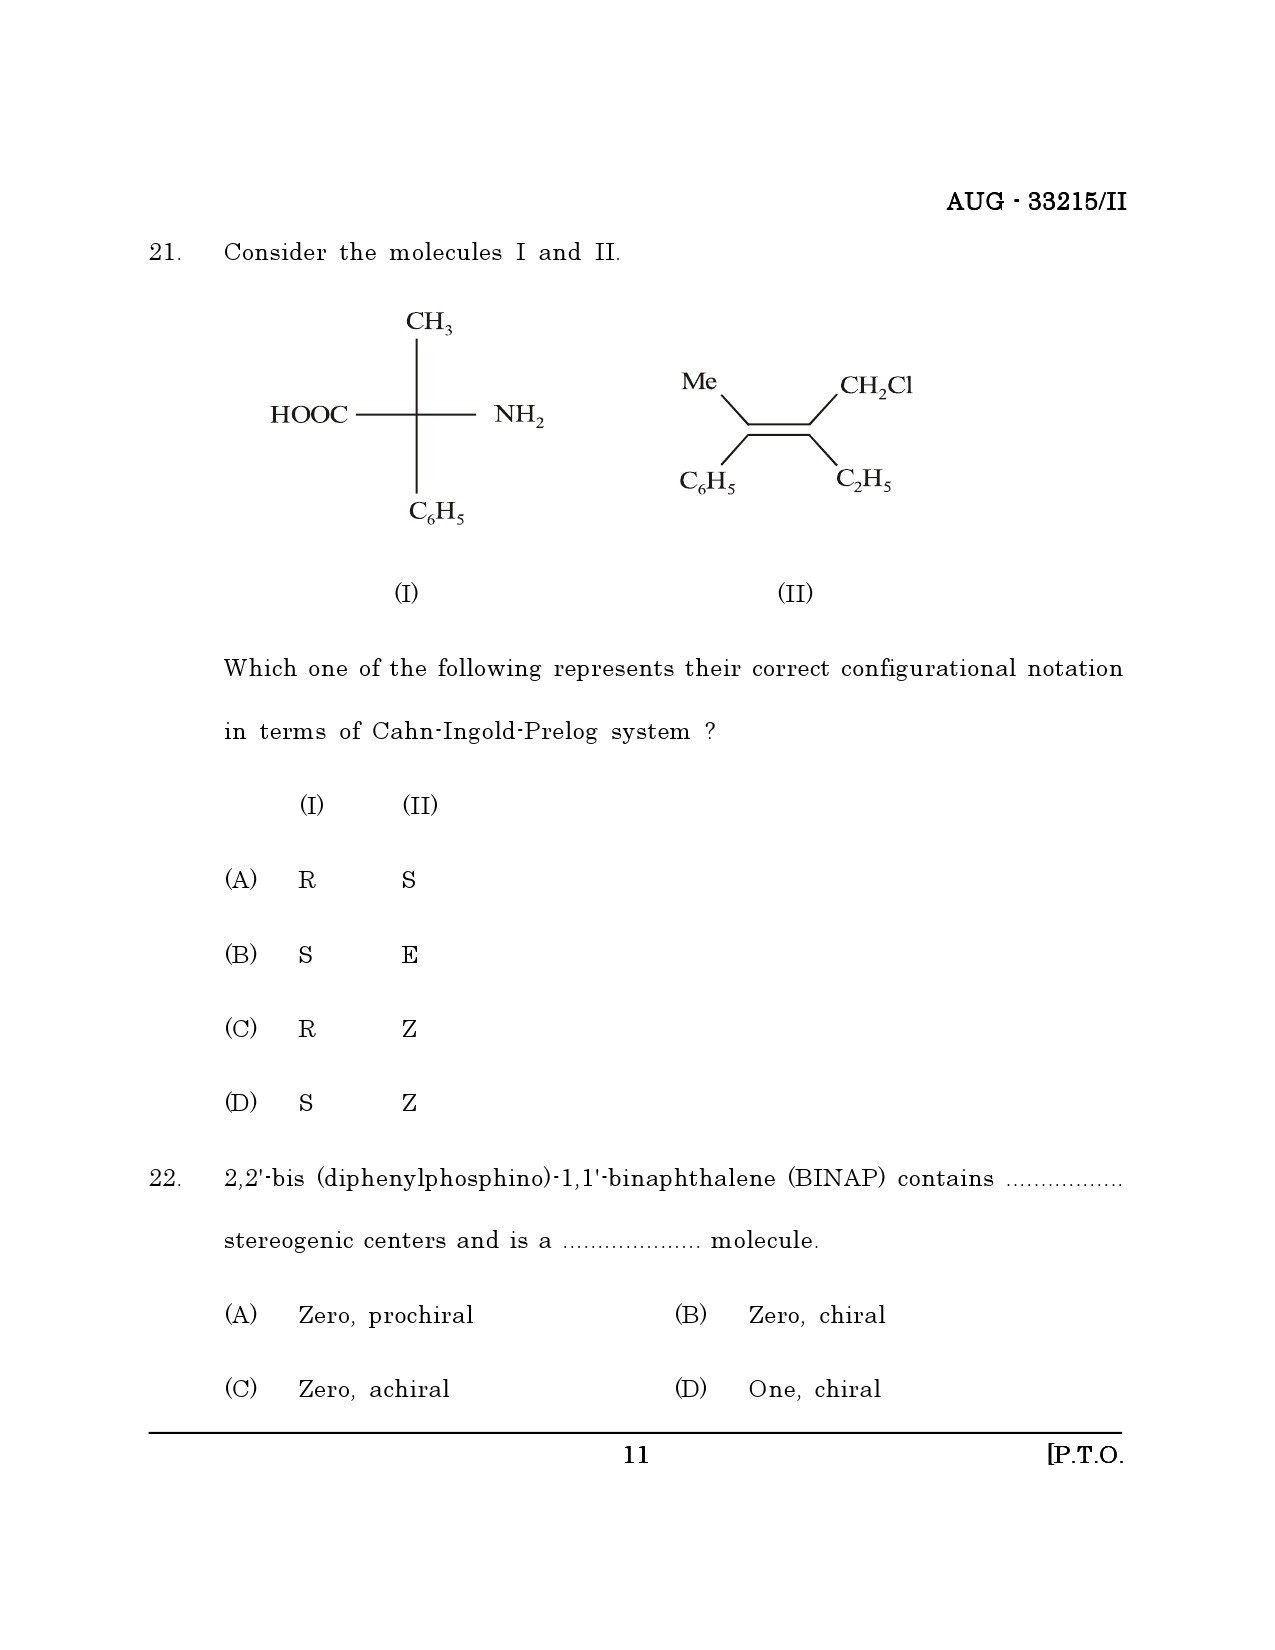 Maharashtra SET Chemical Sciences Question Paper II August 2015 10